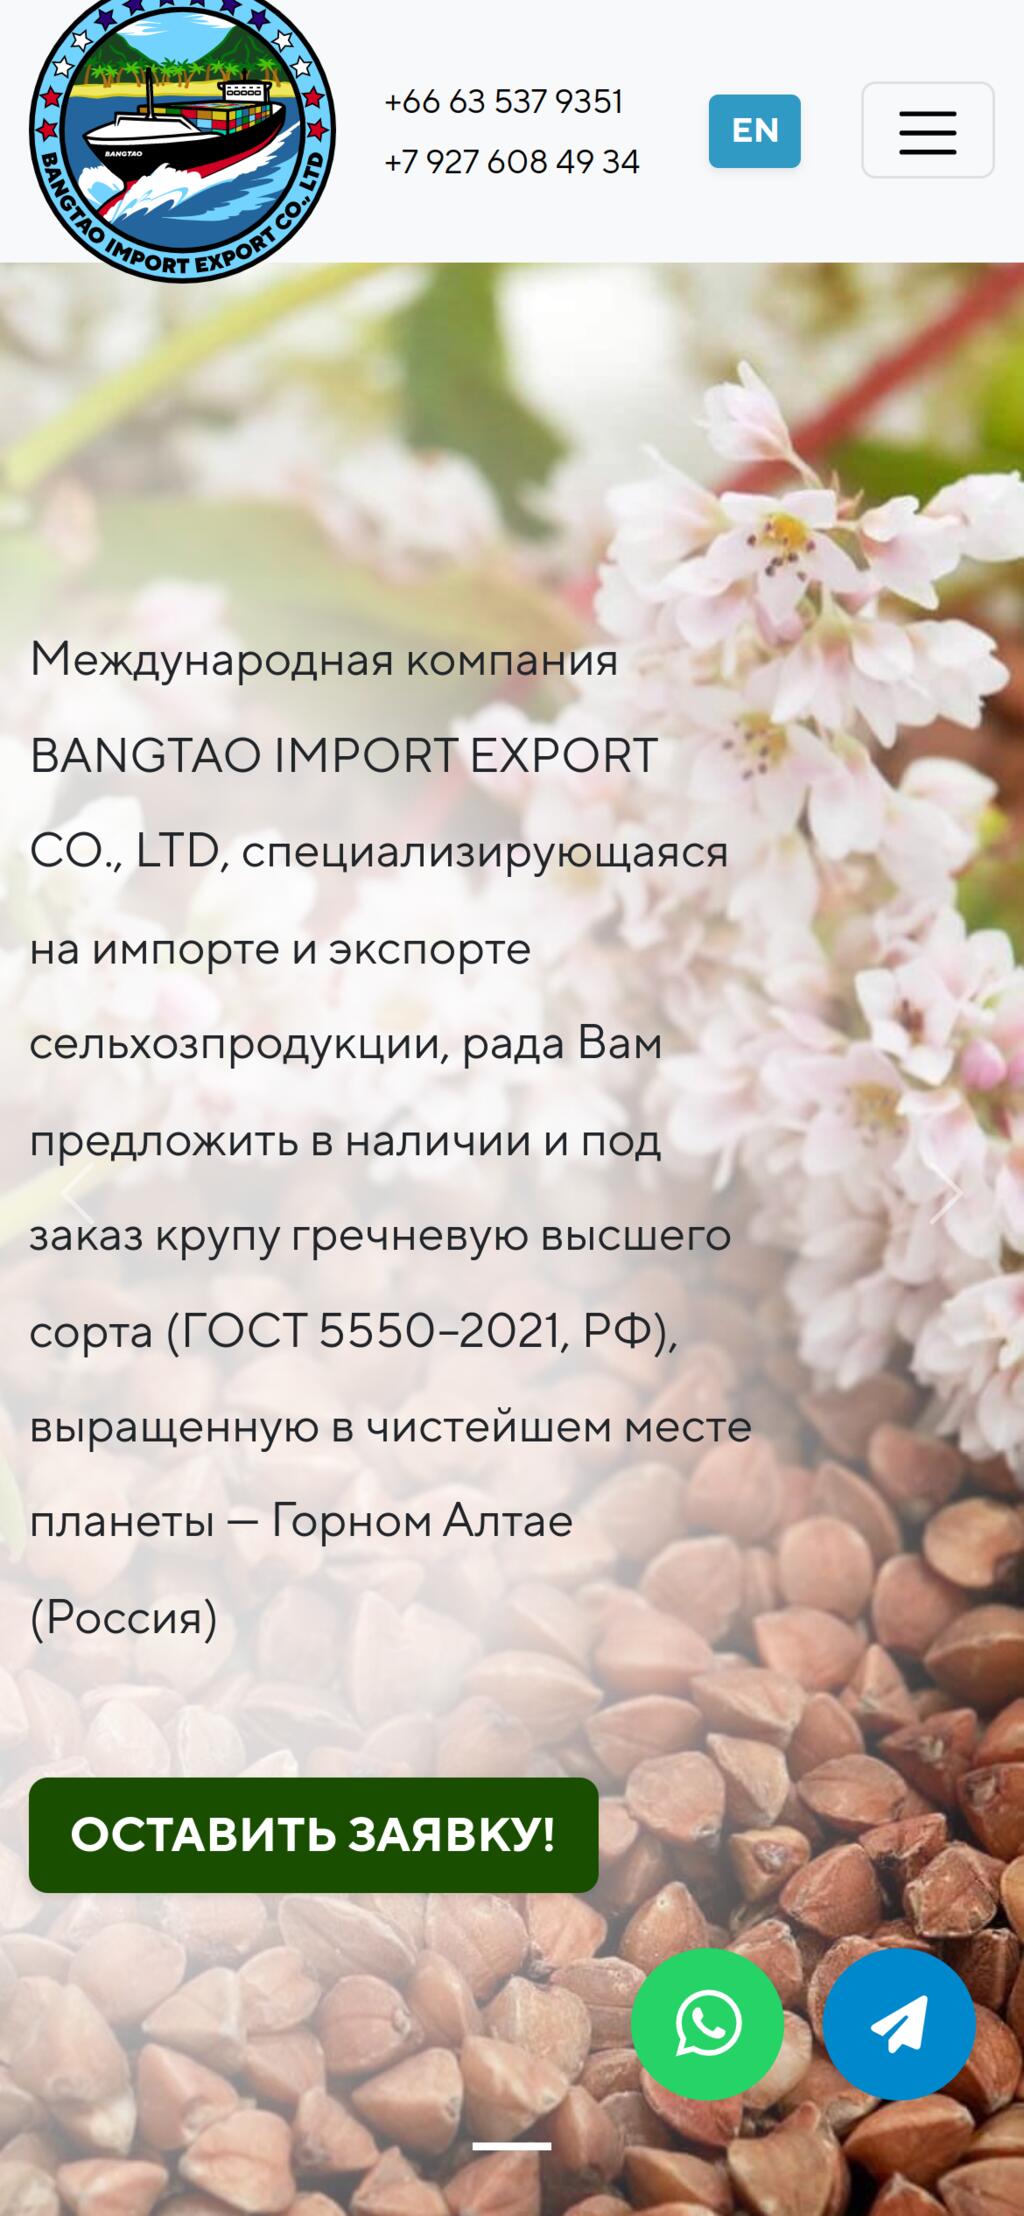 Bangtao Import Export Co., LTD - Website-catalog Groats Wholesale from Russia - Slide 5